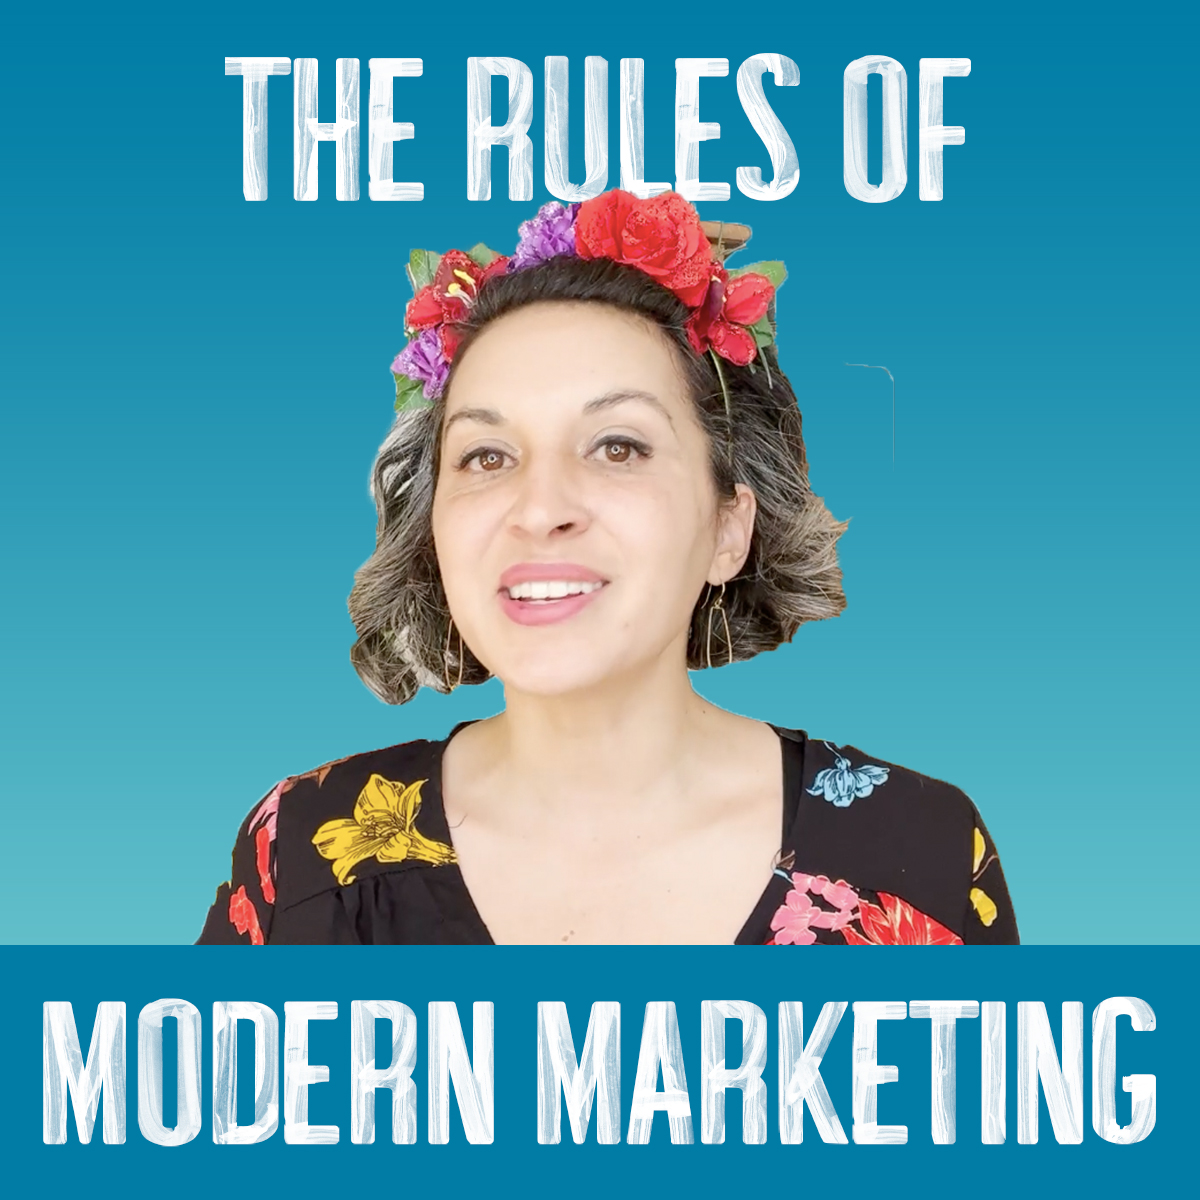 Digital Marketing: The Rules of Modern Marketing